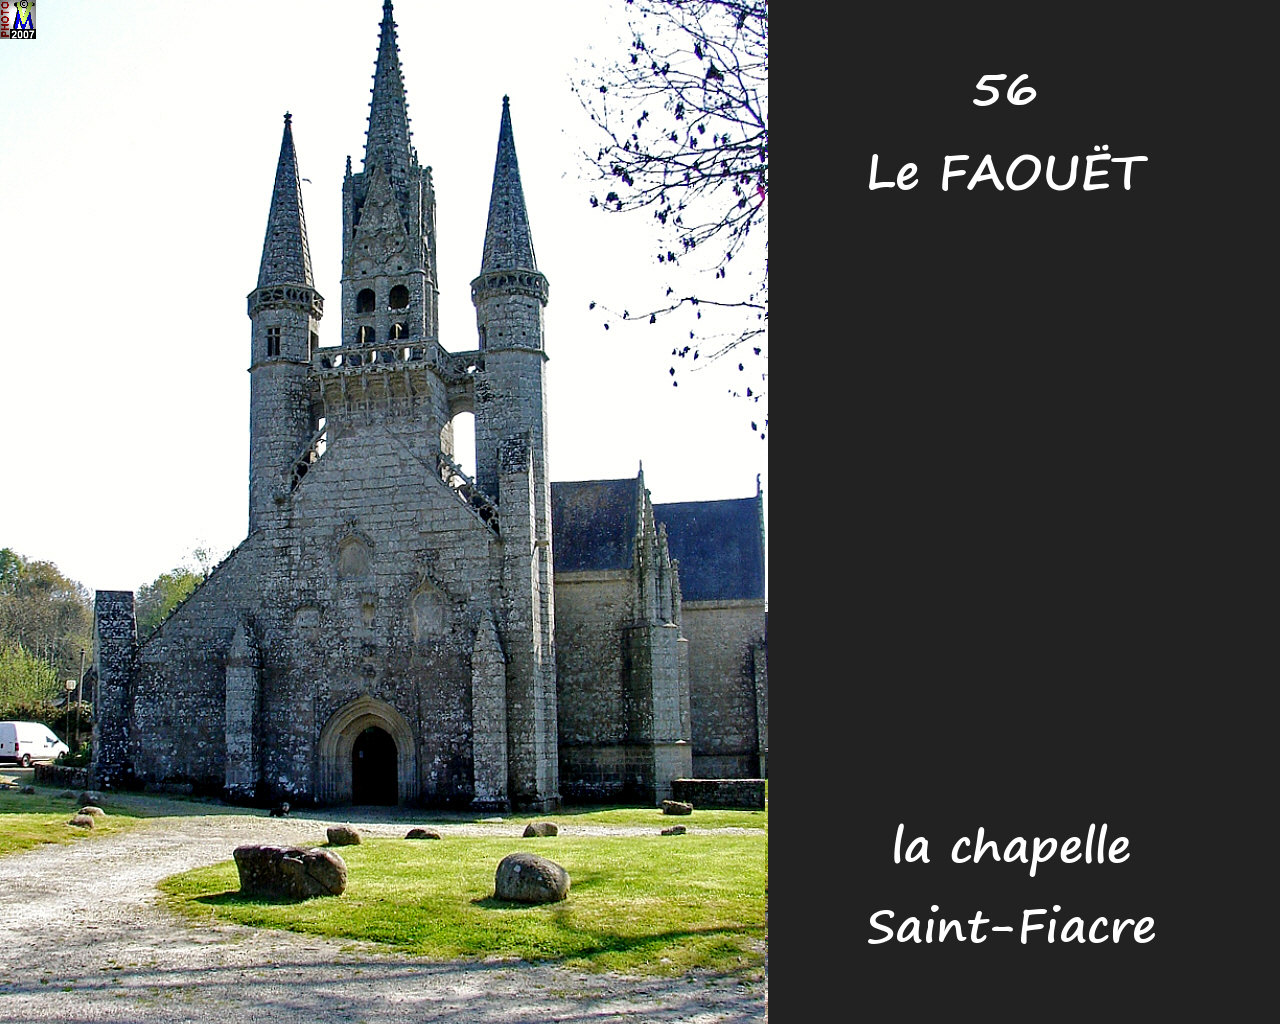 56FAOUET_chapelle-fiacre_102.jpg